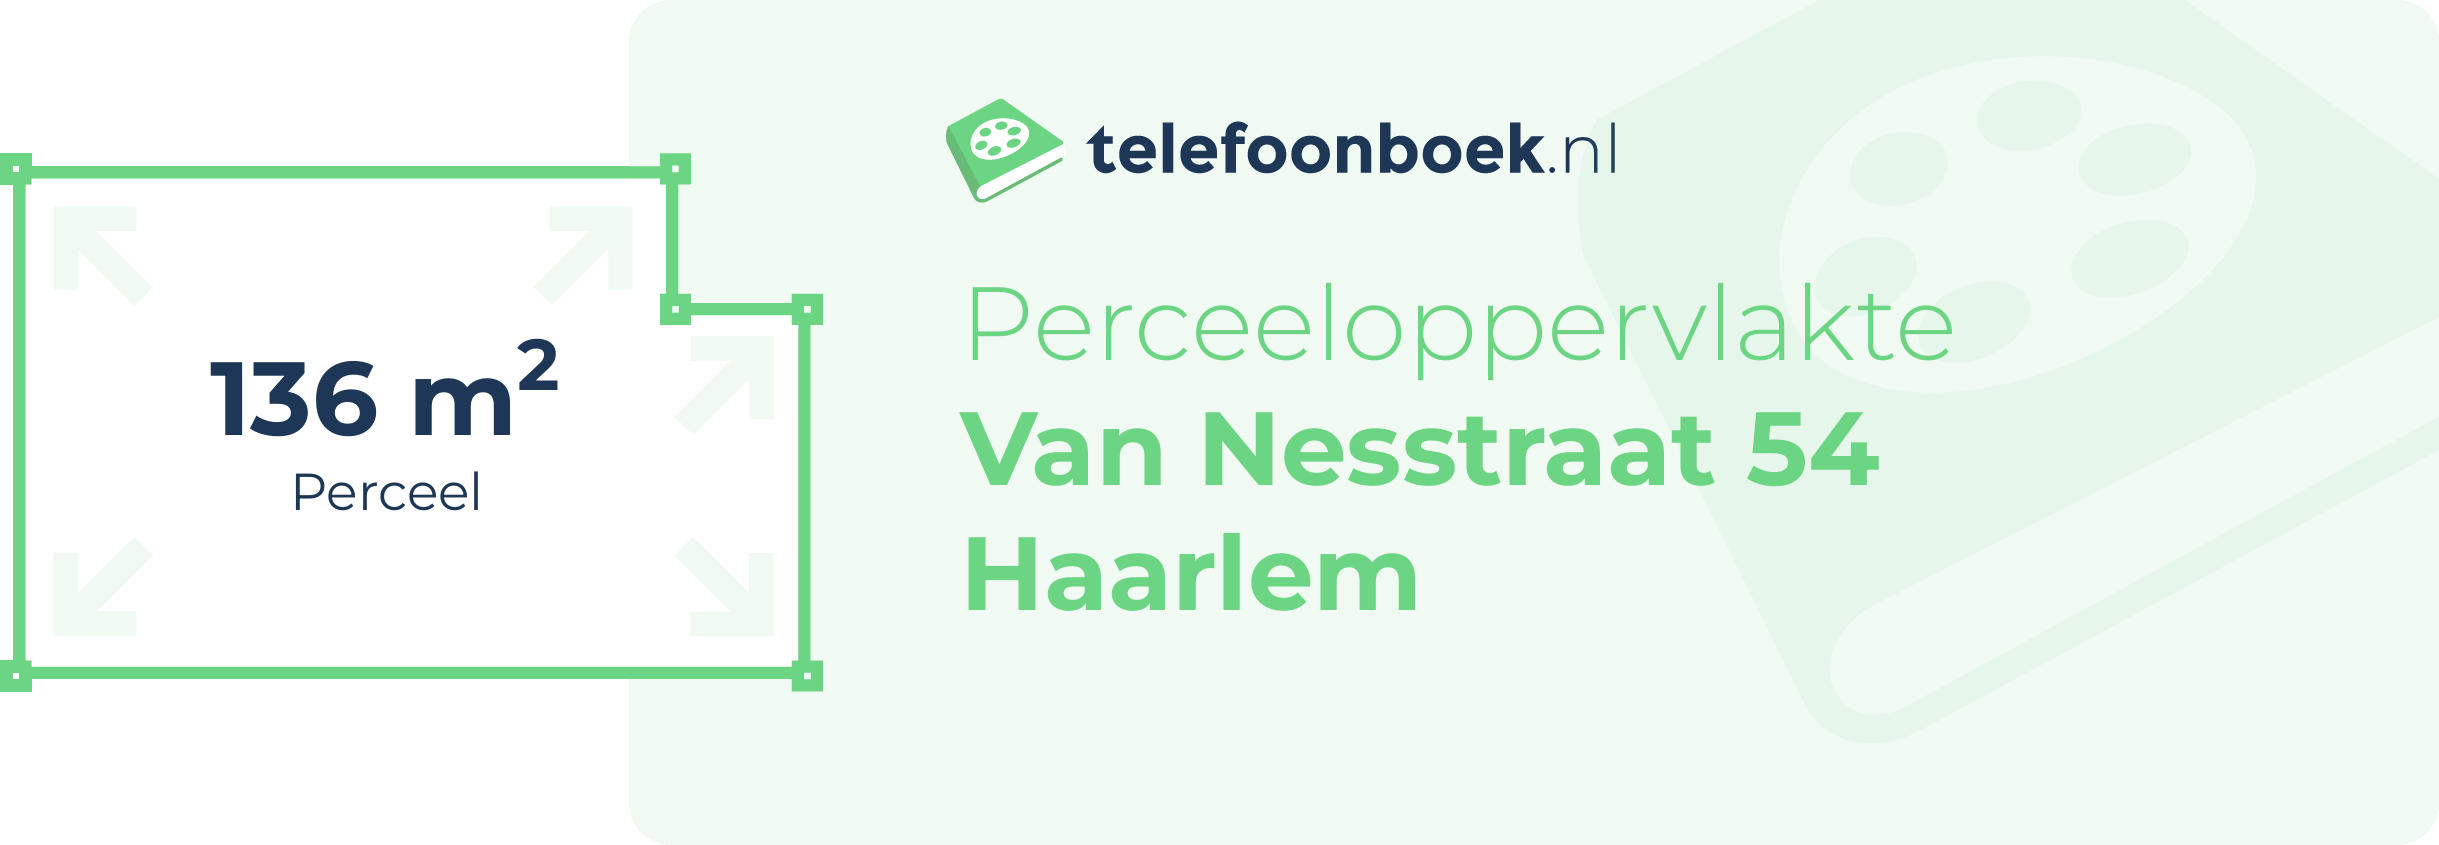 Perceeloppervlakte Van Nesstraat 54 Haarlem